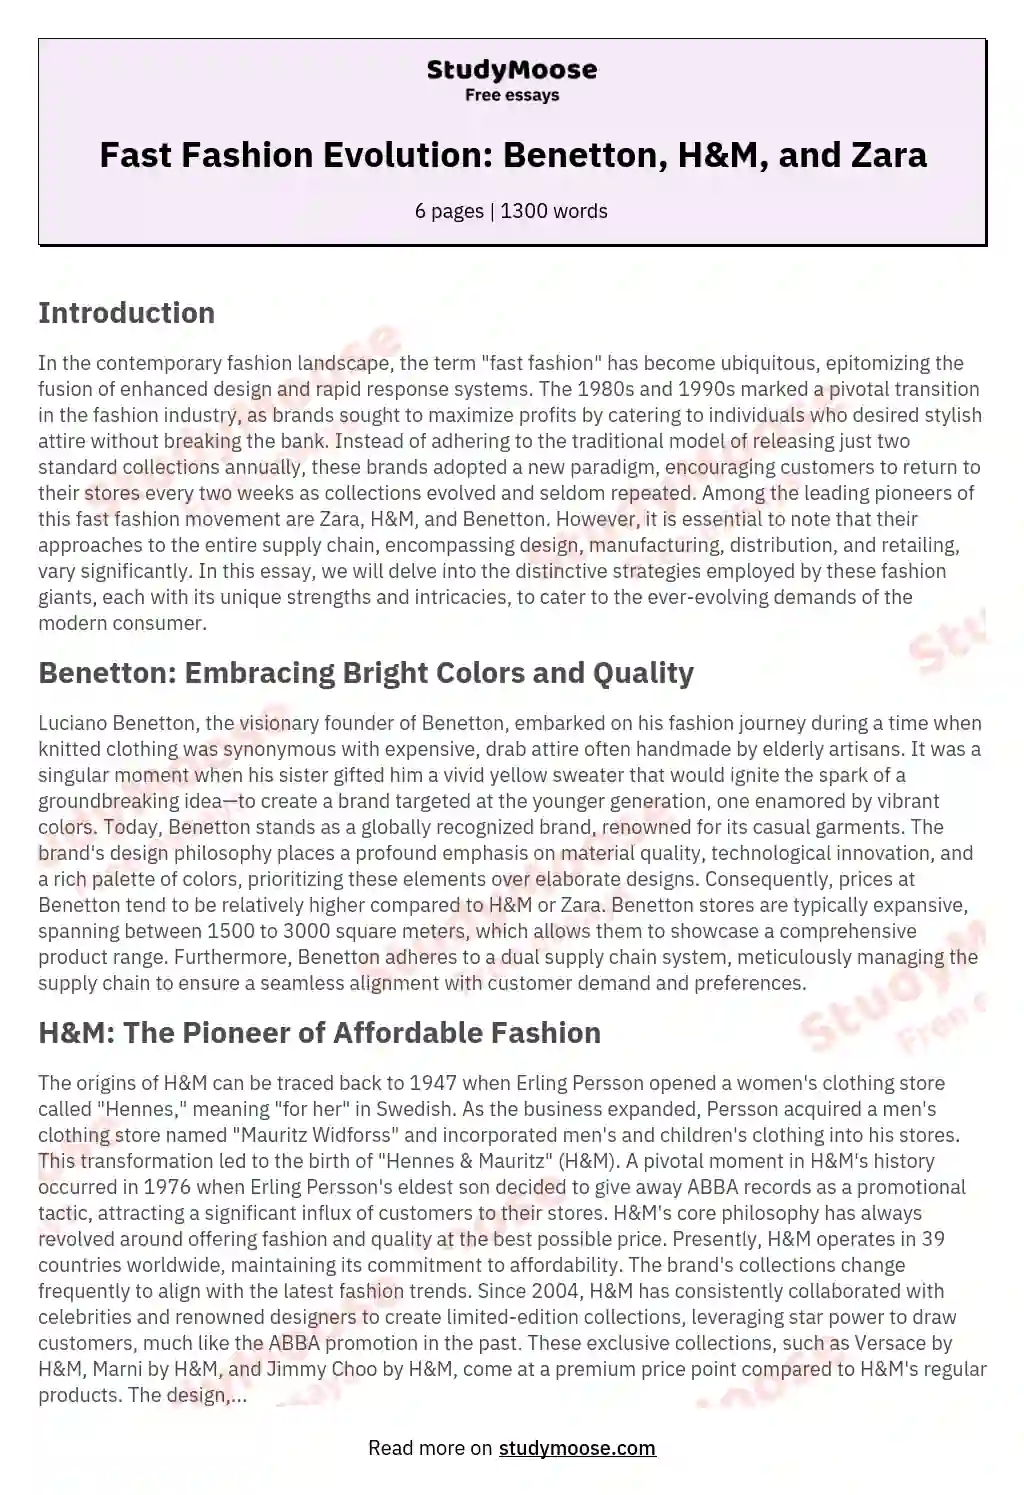 Fast Fashion Evolution: Benetton, H&M, and Zara essay